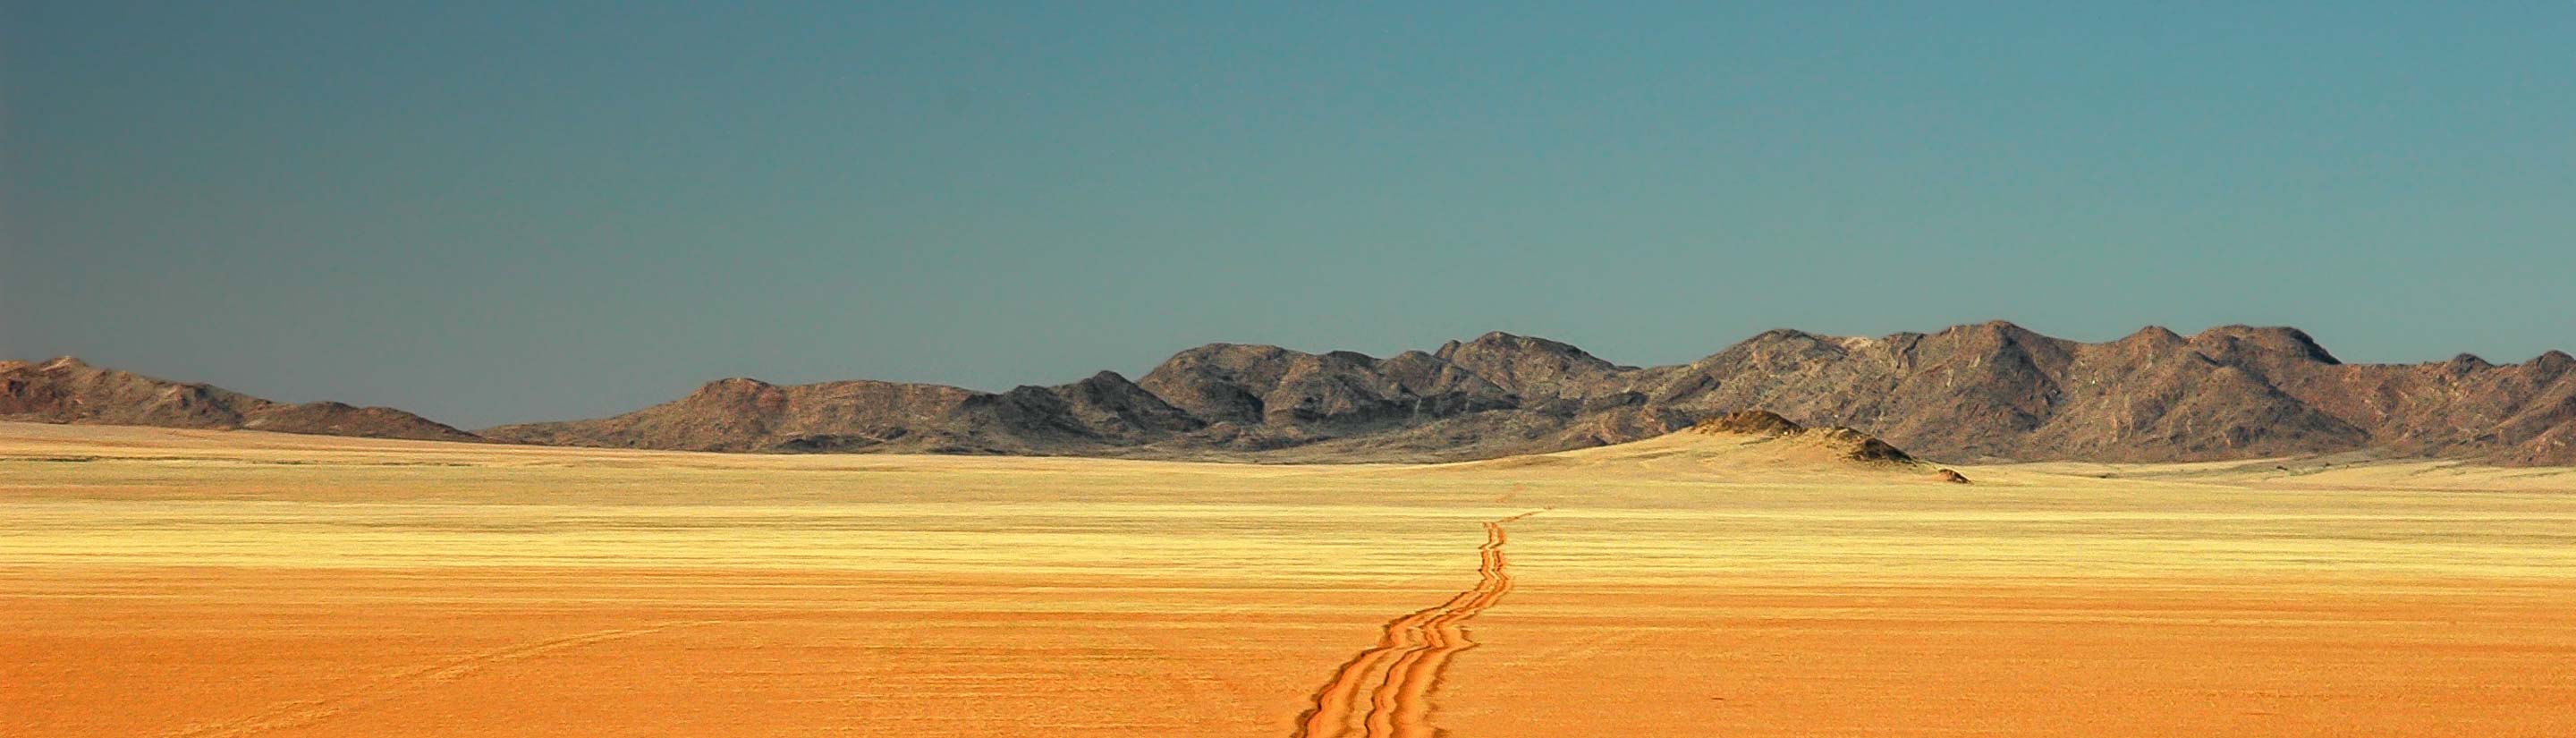 Weite gelbe Sandstraße in Namibia